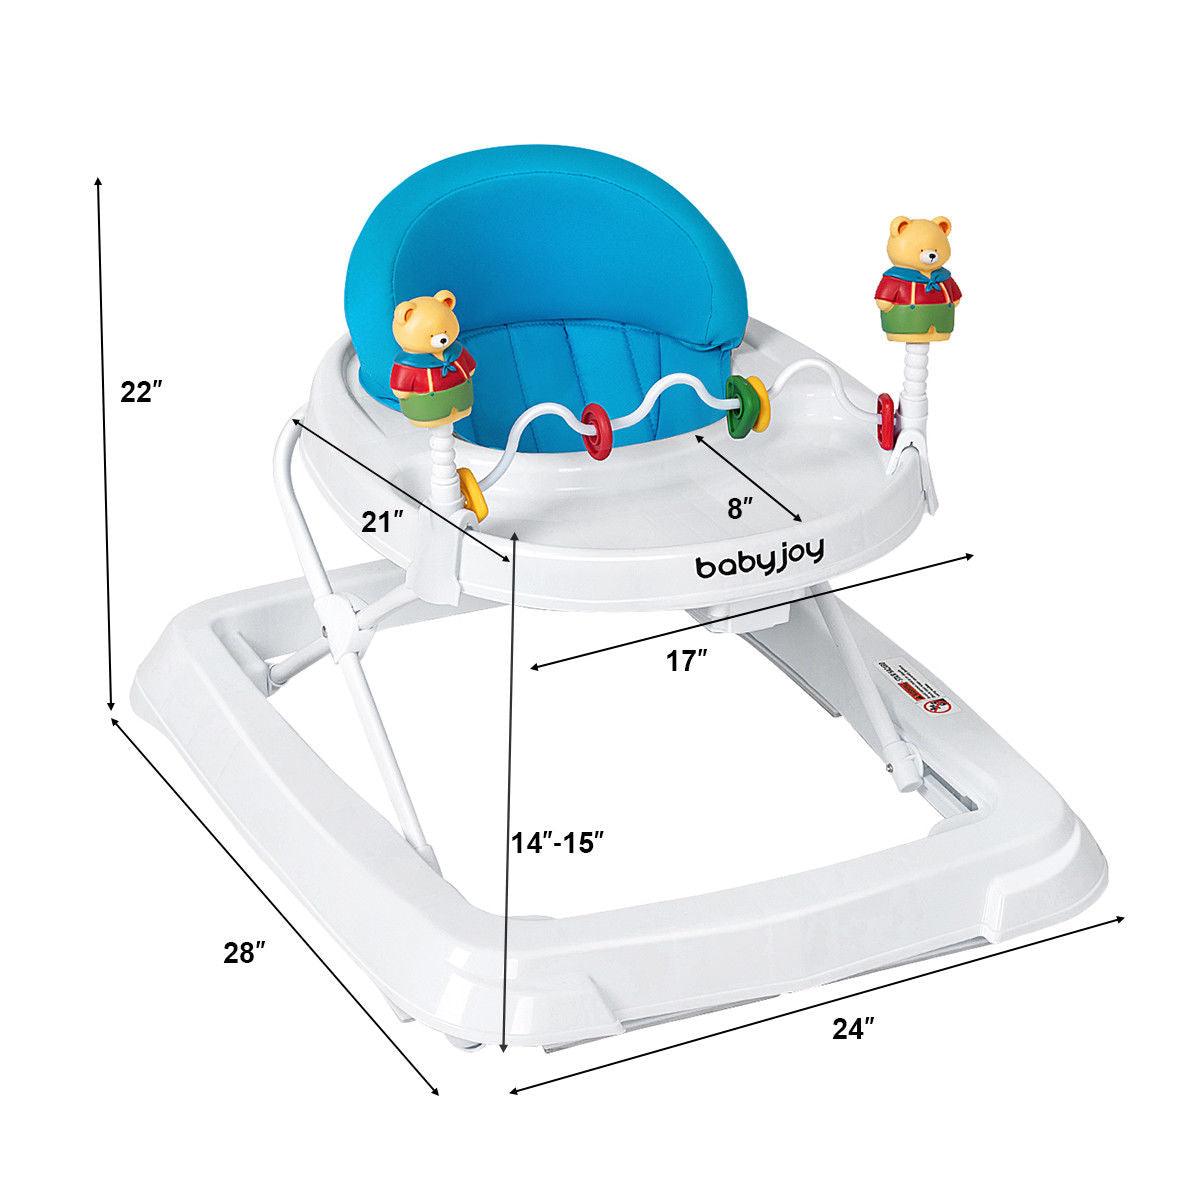 Cart Adjustable Height Blue - Portable Baby Walker Kids Learn To Walk Toy (1U01)(X9)